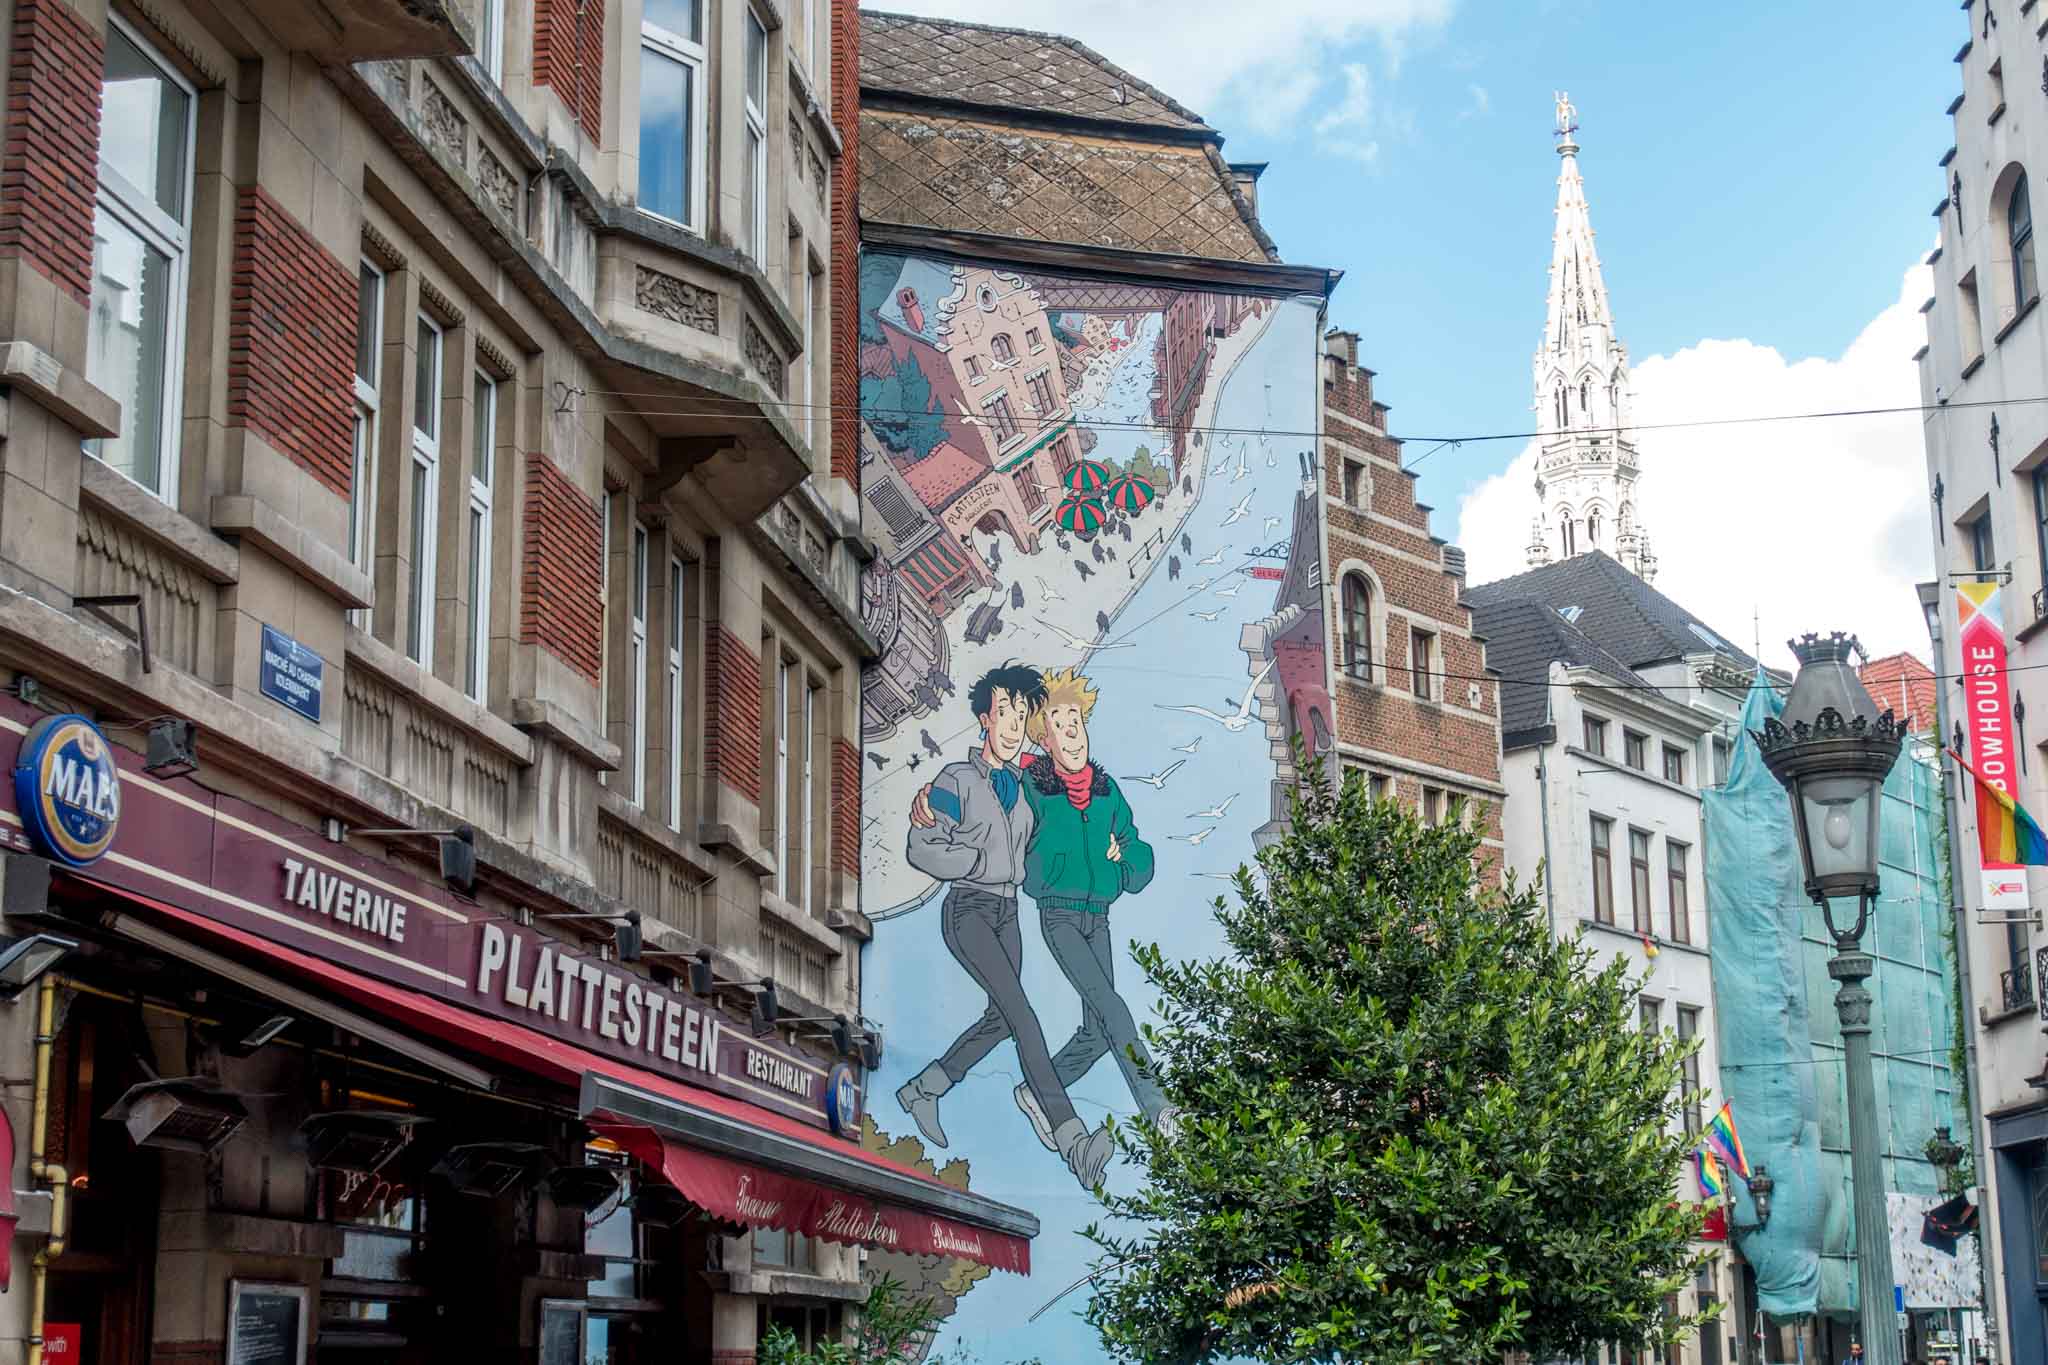 Street art mural of couple walking down the street in Brussels